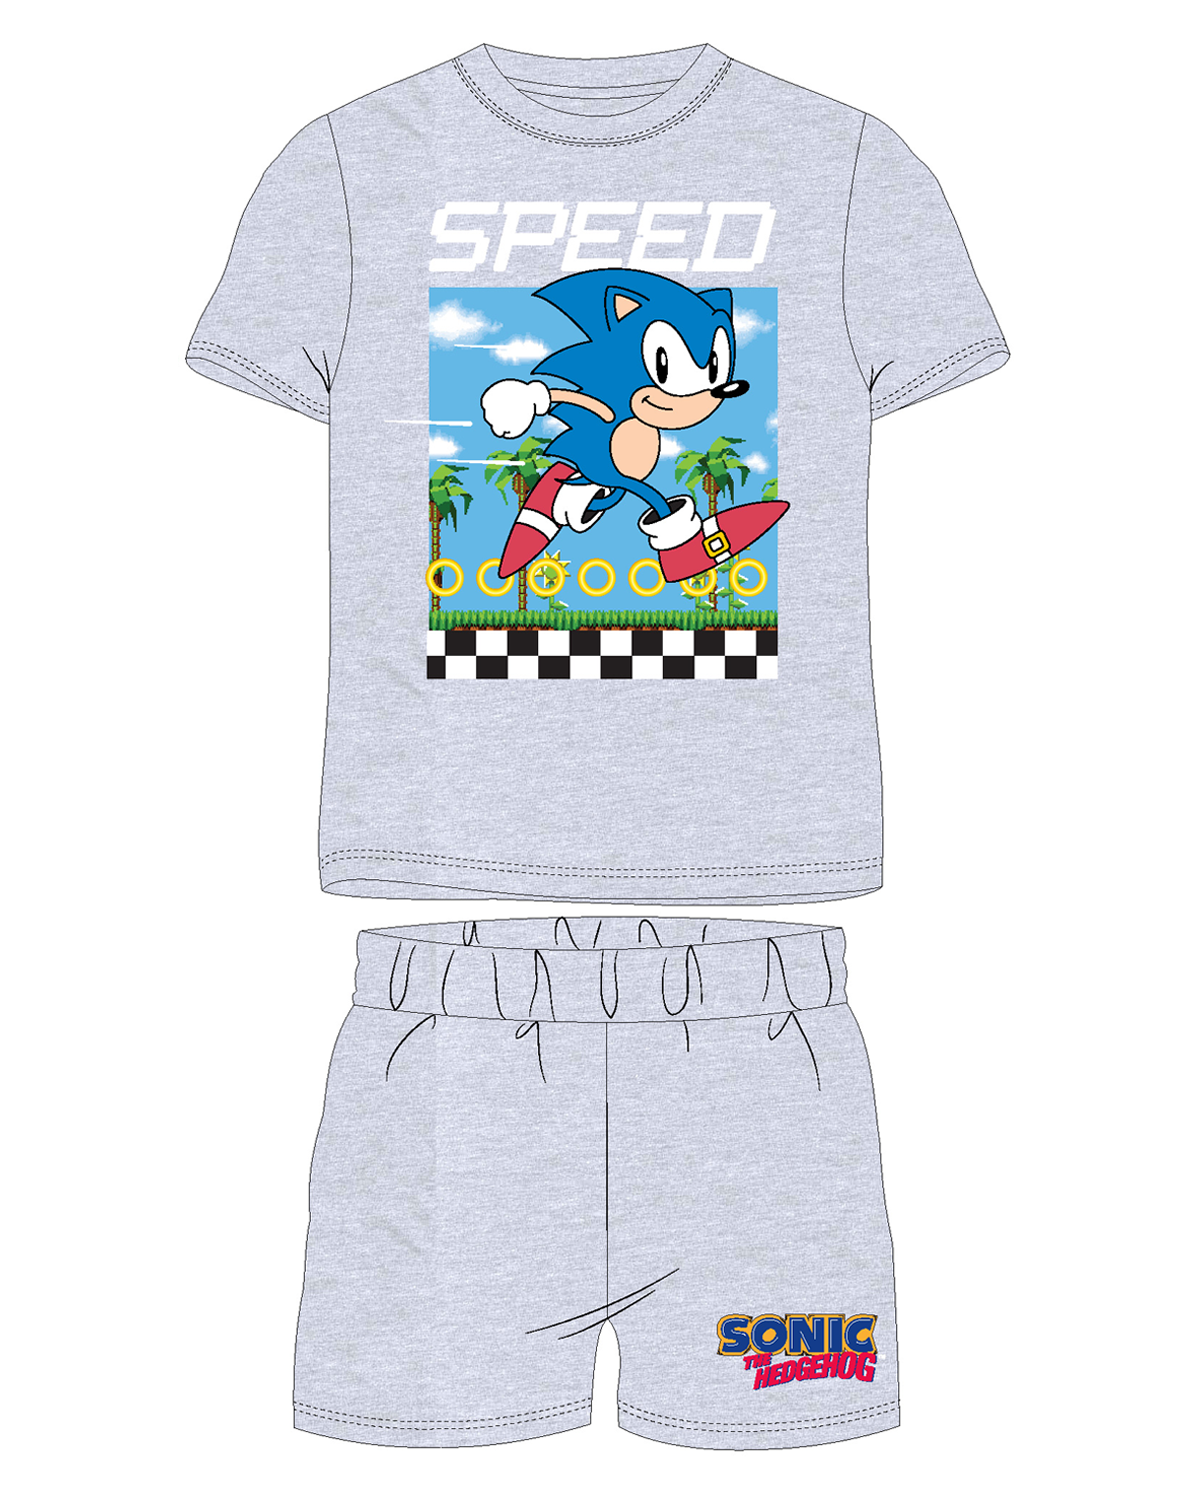 Ježek SONIC - licence Chlapecké pyžamo - Ježek Sonic 5204008W, šedý melír Barva: Šedá, Velikost: 116